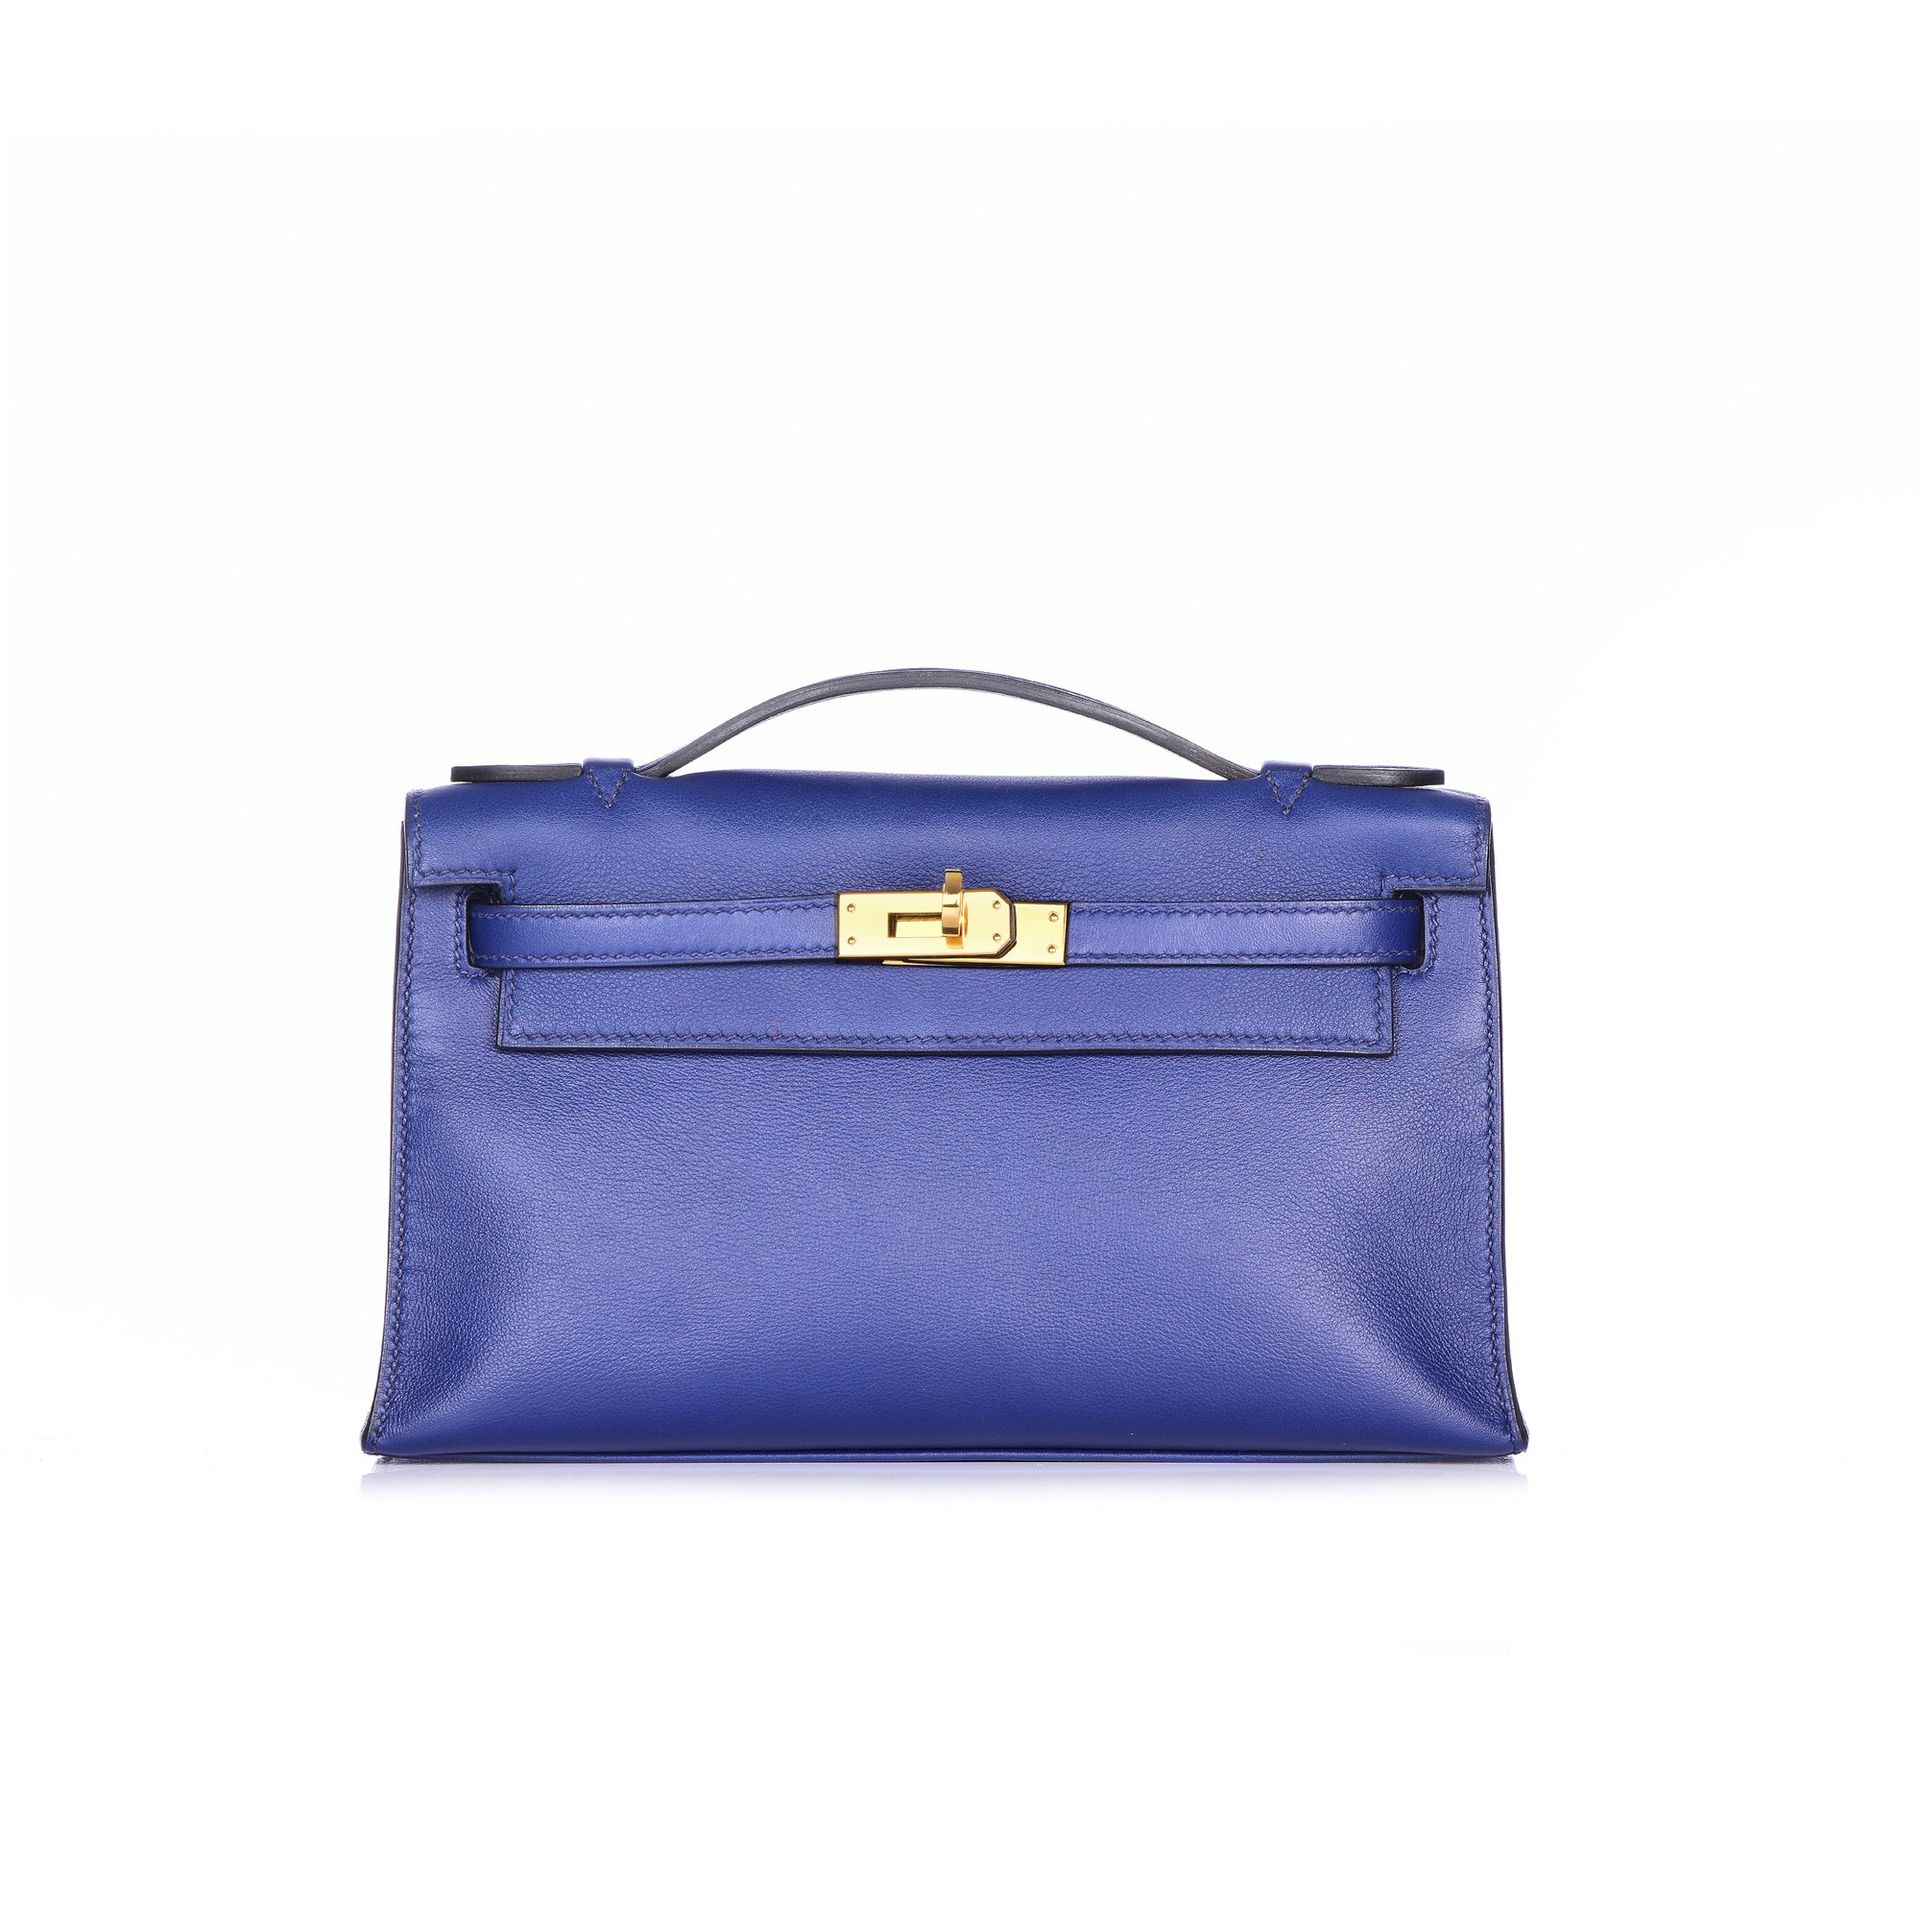 HERMES Hermès mini Kelly clutch bag 22 in Swift Blue France leather with gold ha&hellip;